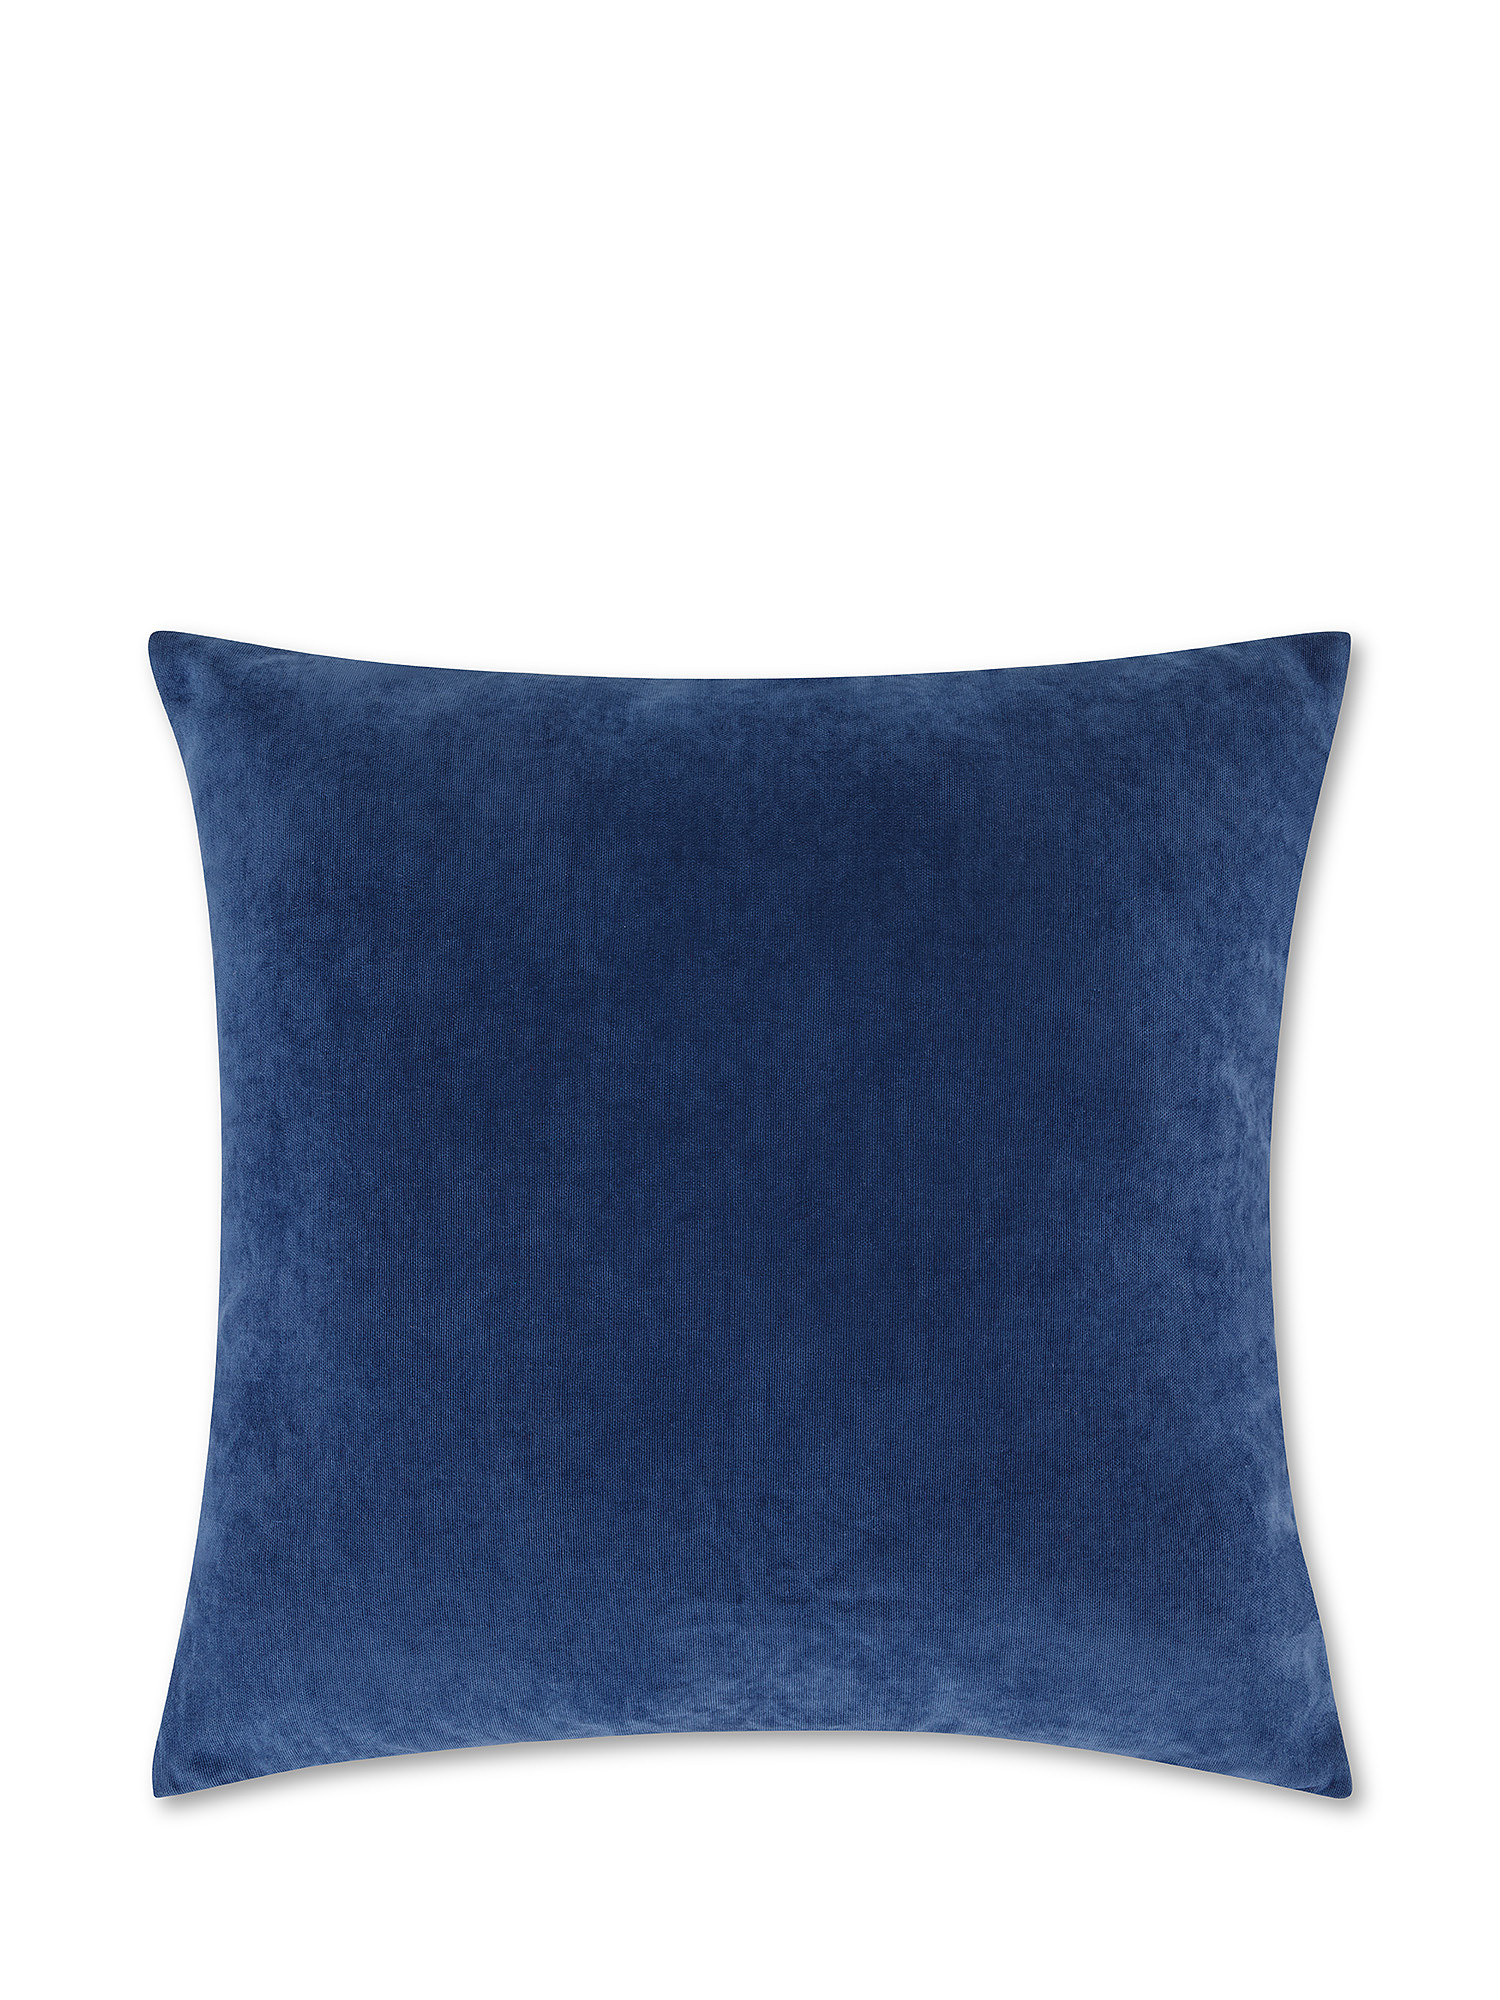 Cuscino stampa vele 50x50cm, Azzurro, large image number 1